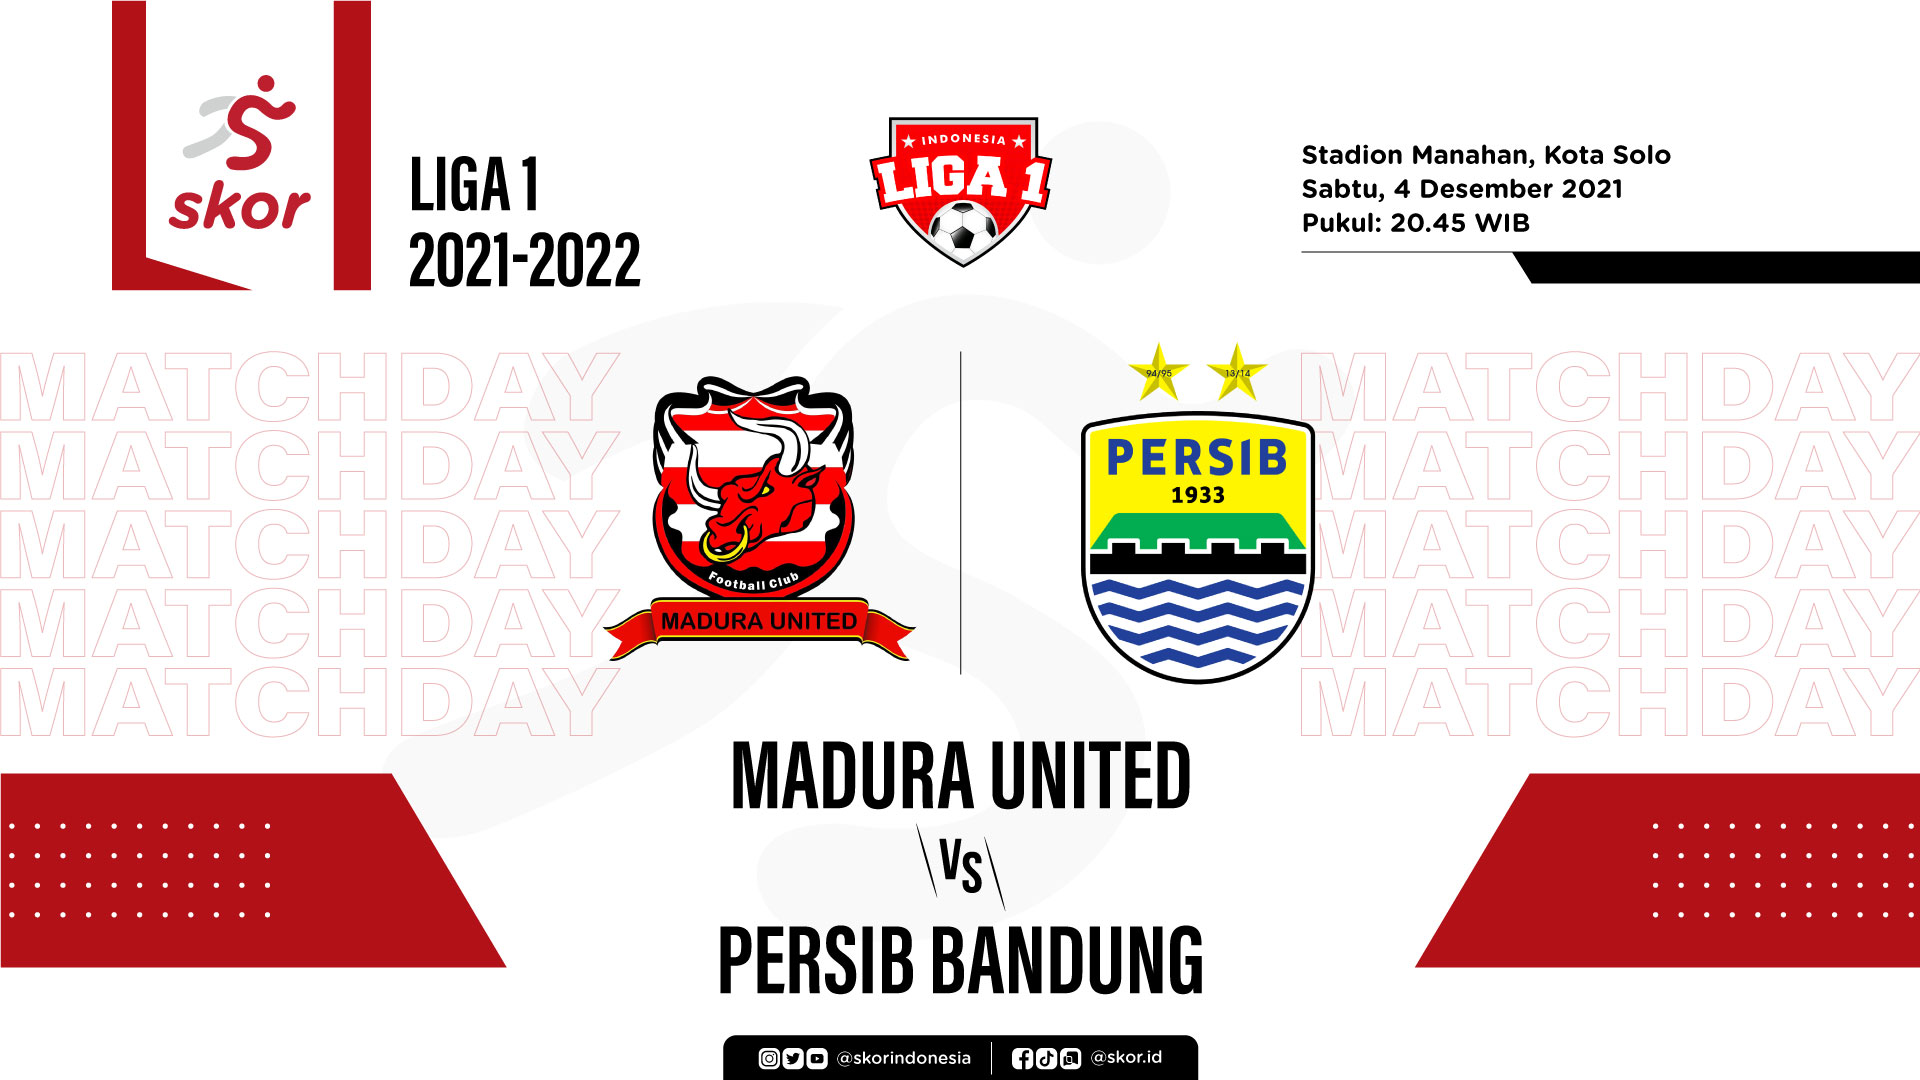 Madura United vs Persib Bandung: Prediksi dan Link Live Streaming